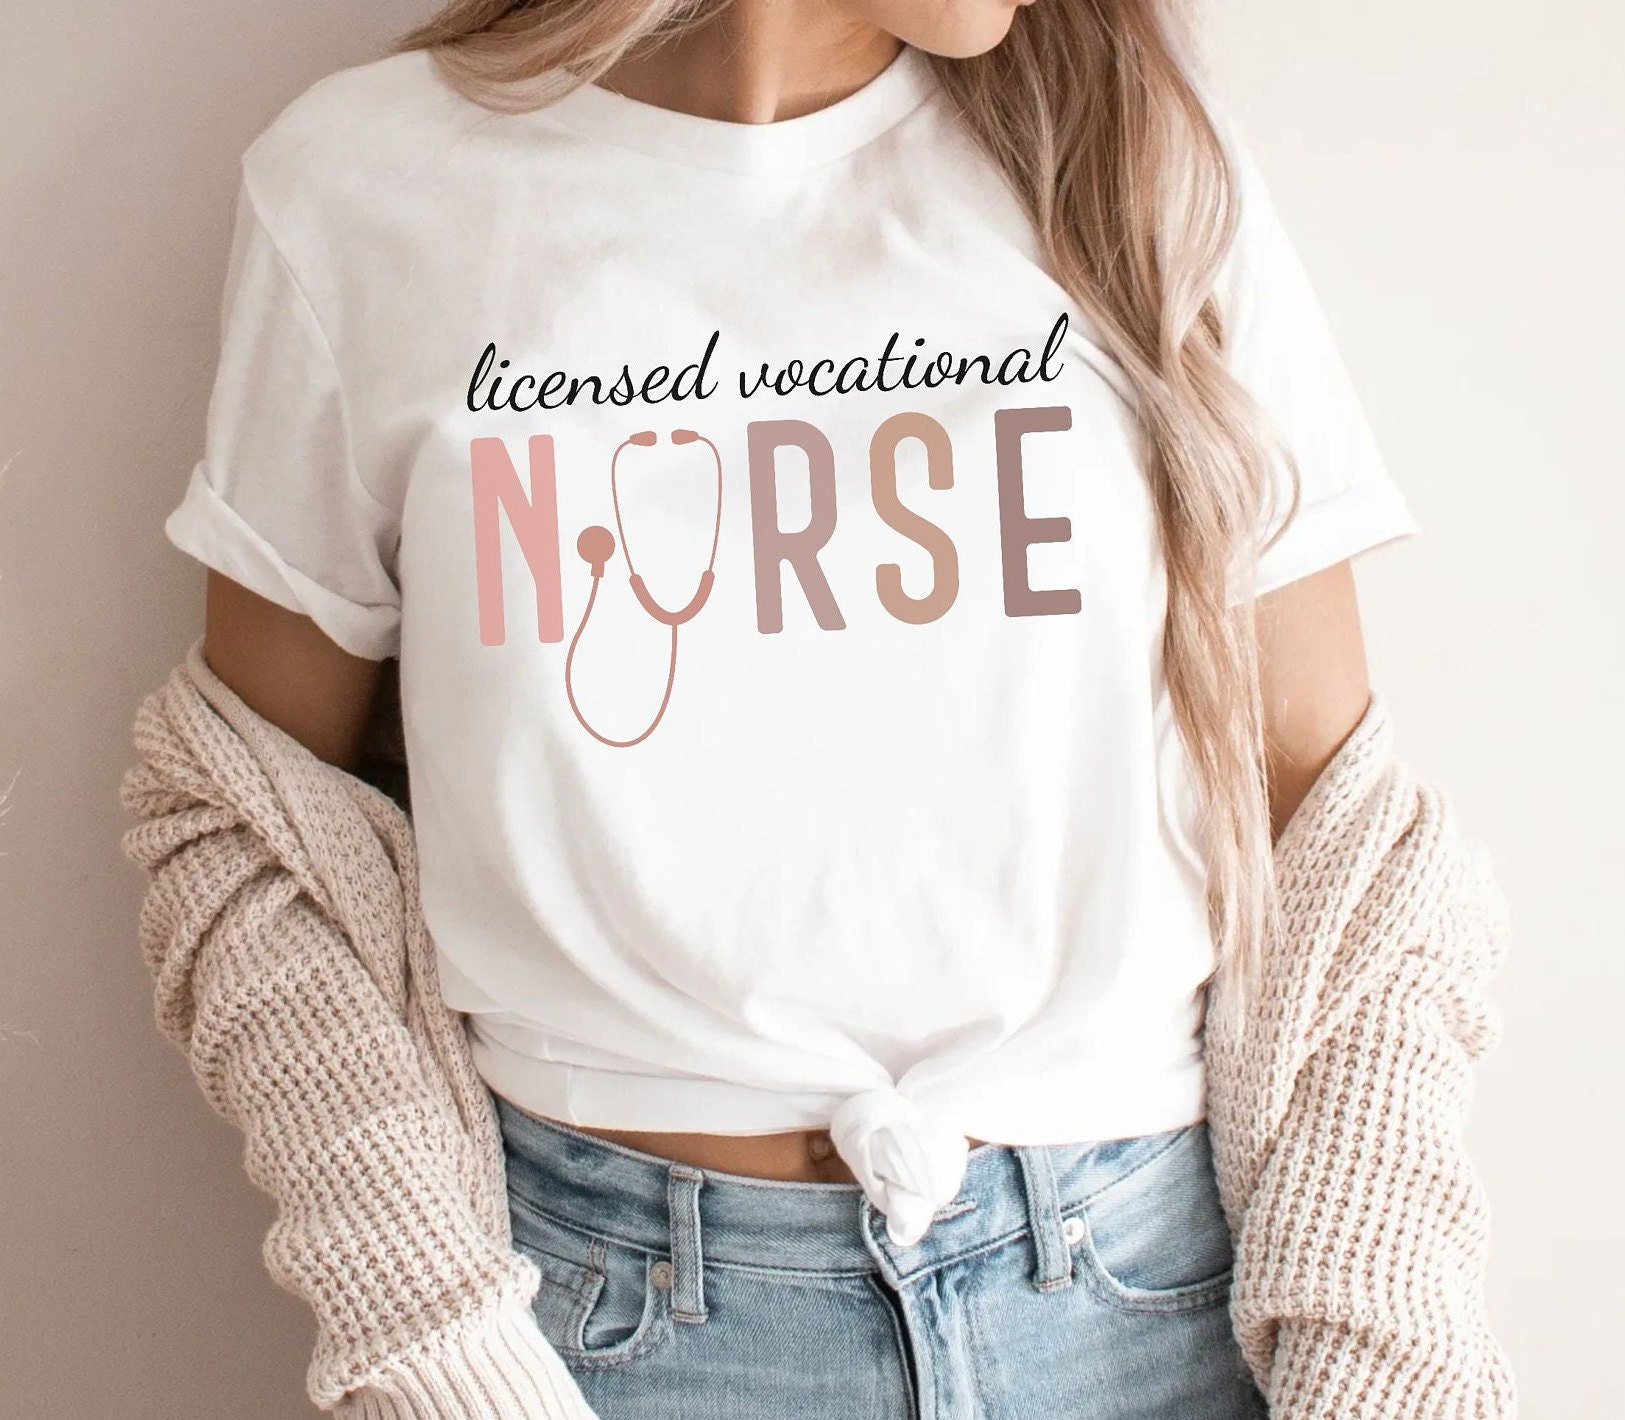 LVN Vocational Nurse Premium T-Shirt